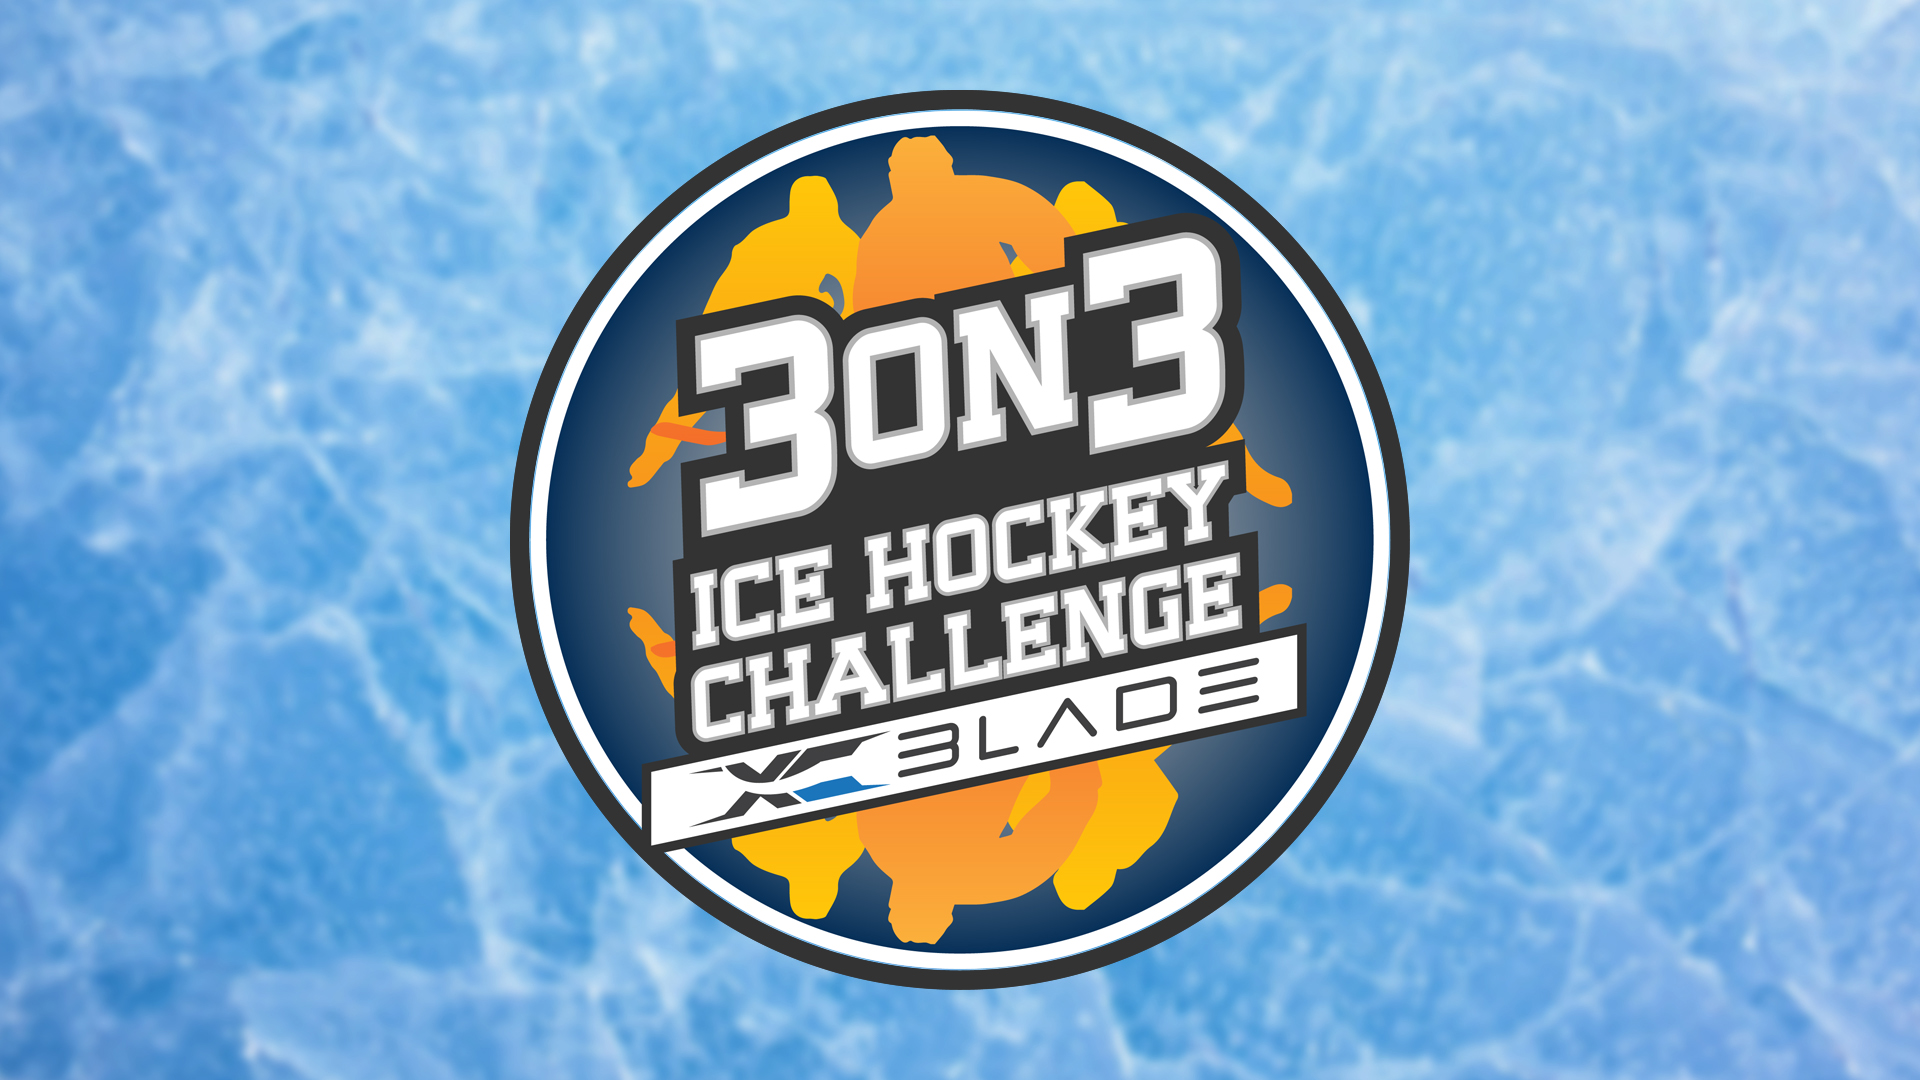 XCBlade 3on3 Icehockey Challenge Tournament